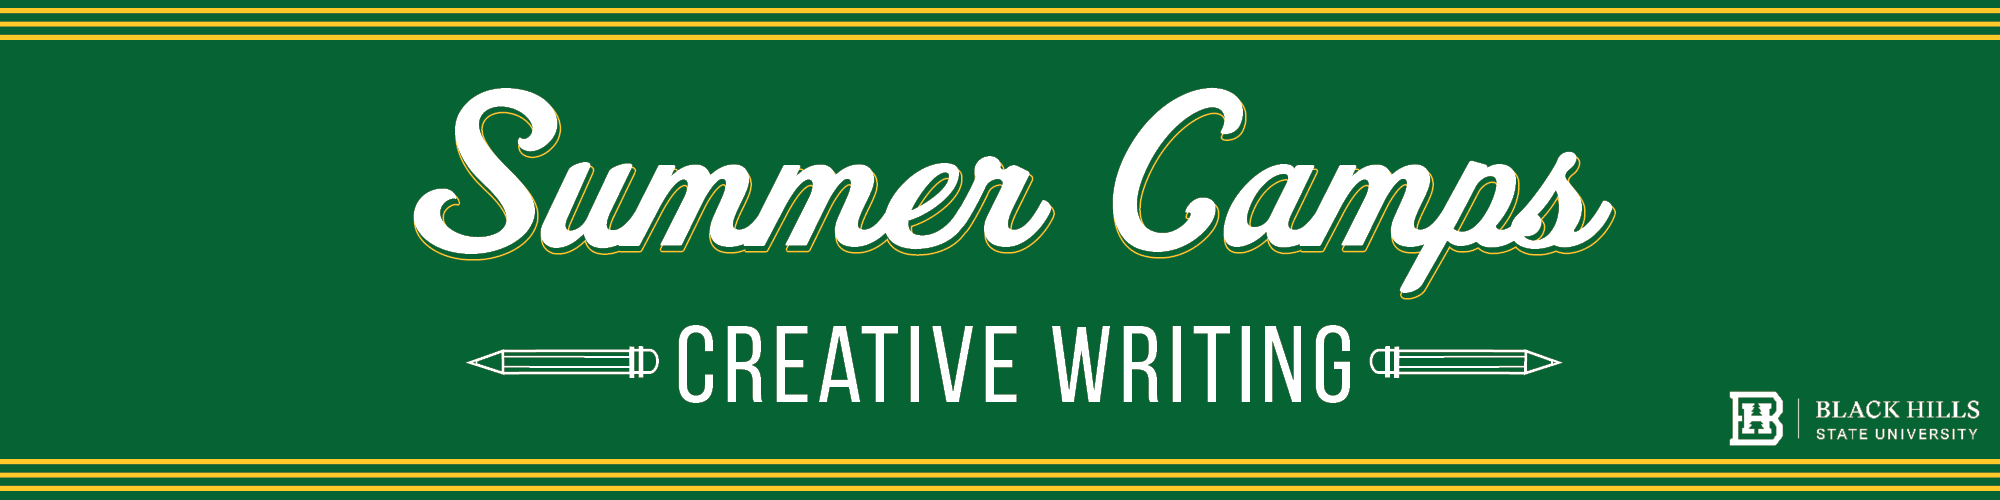 Creative Writing Banner